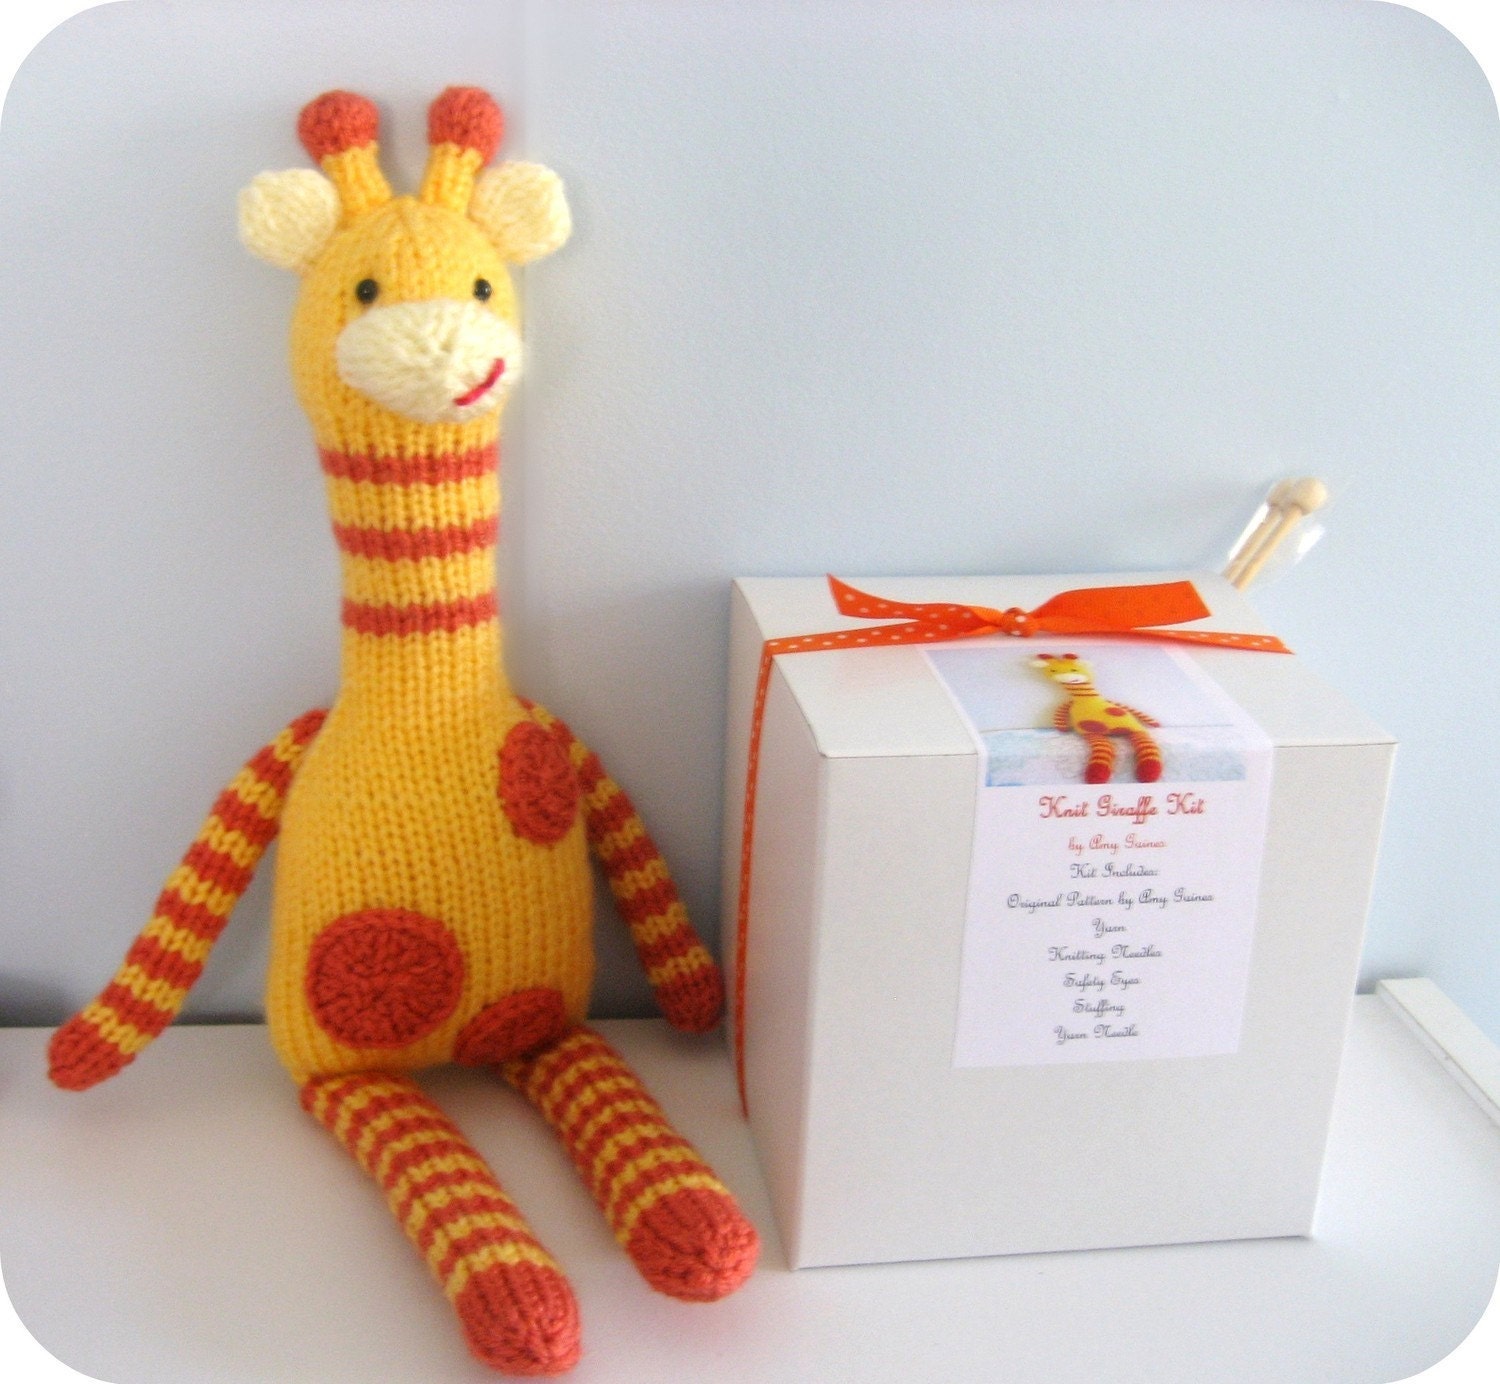 Kit - Knit Giraffe Kit by Amy Gaines